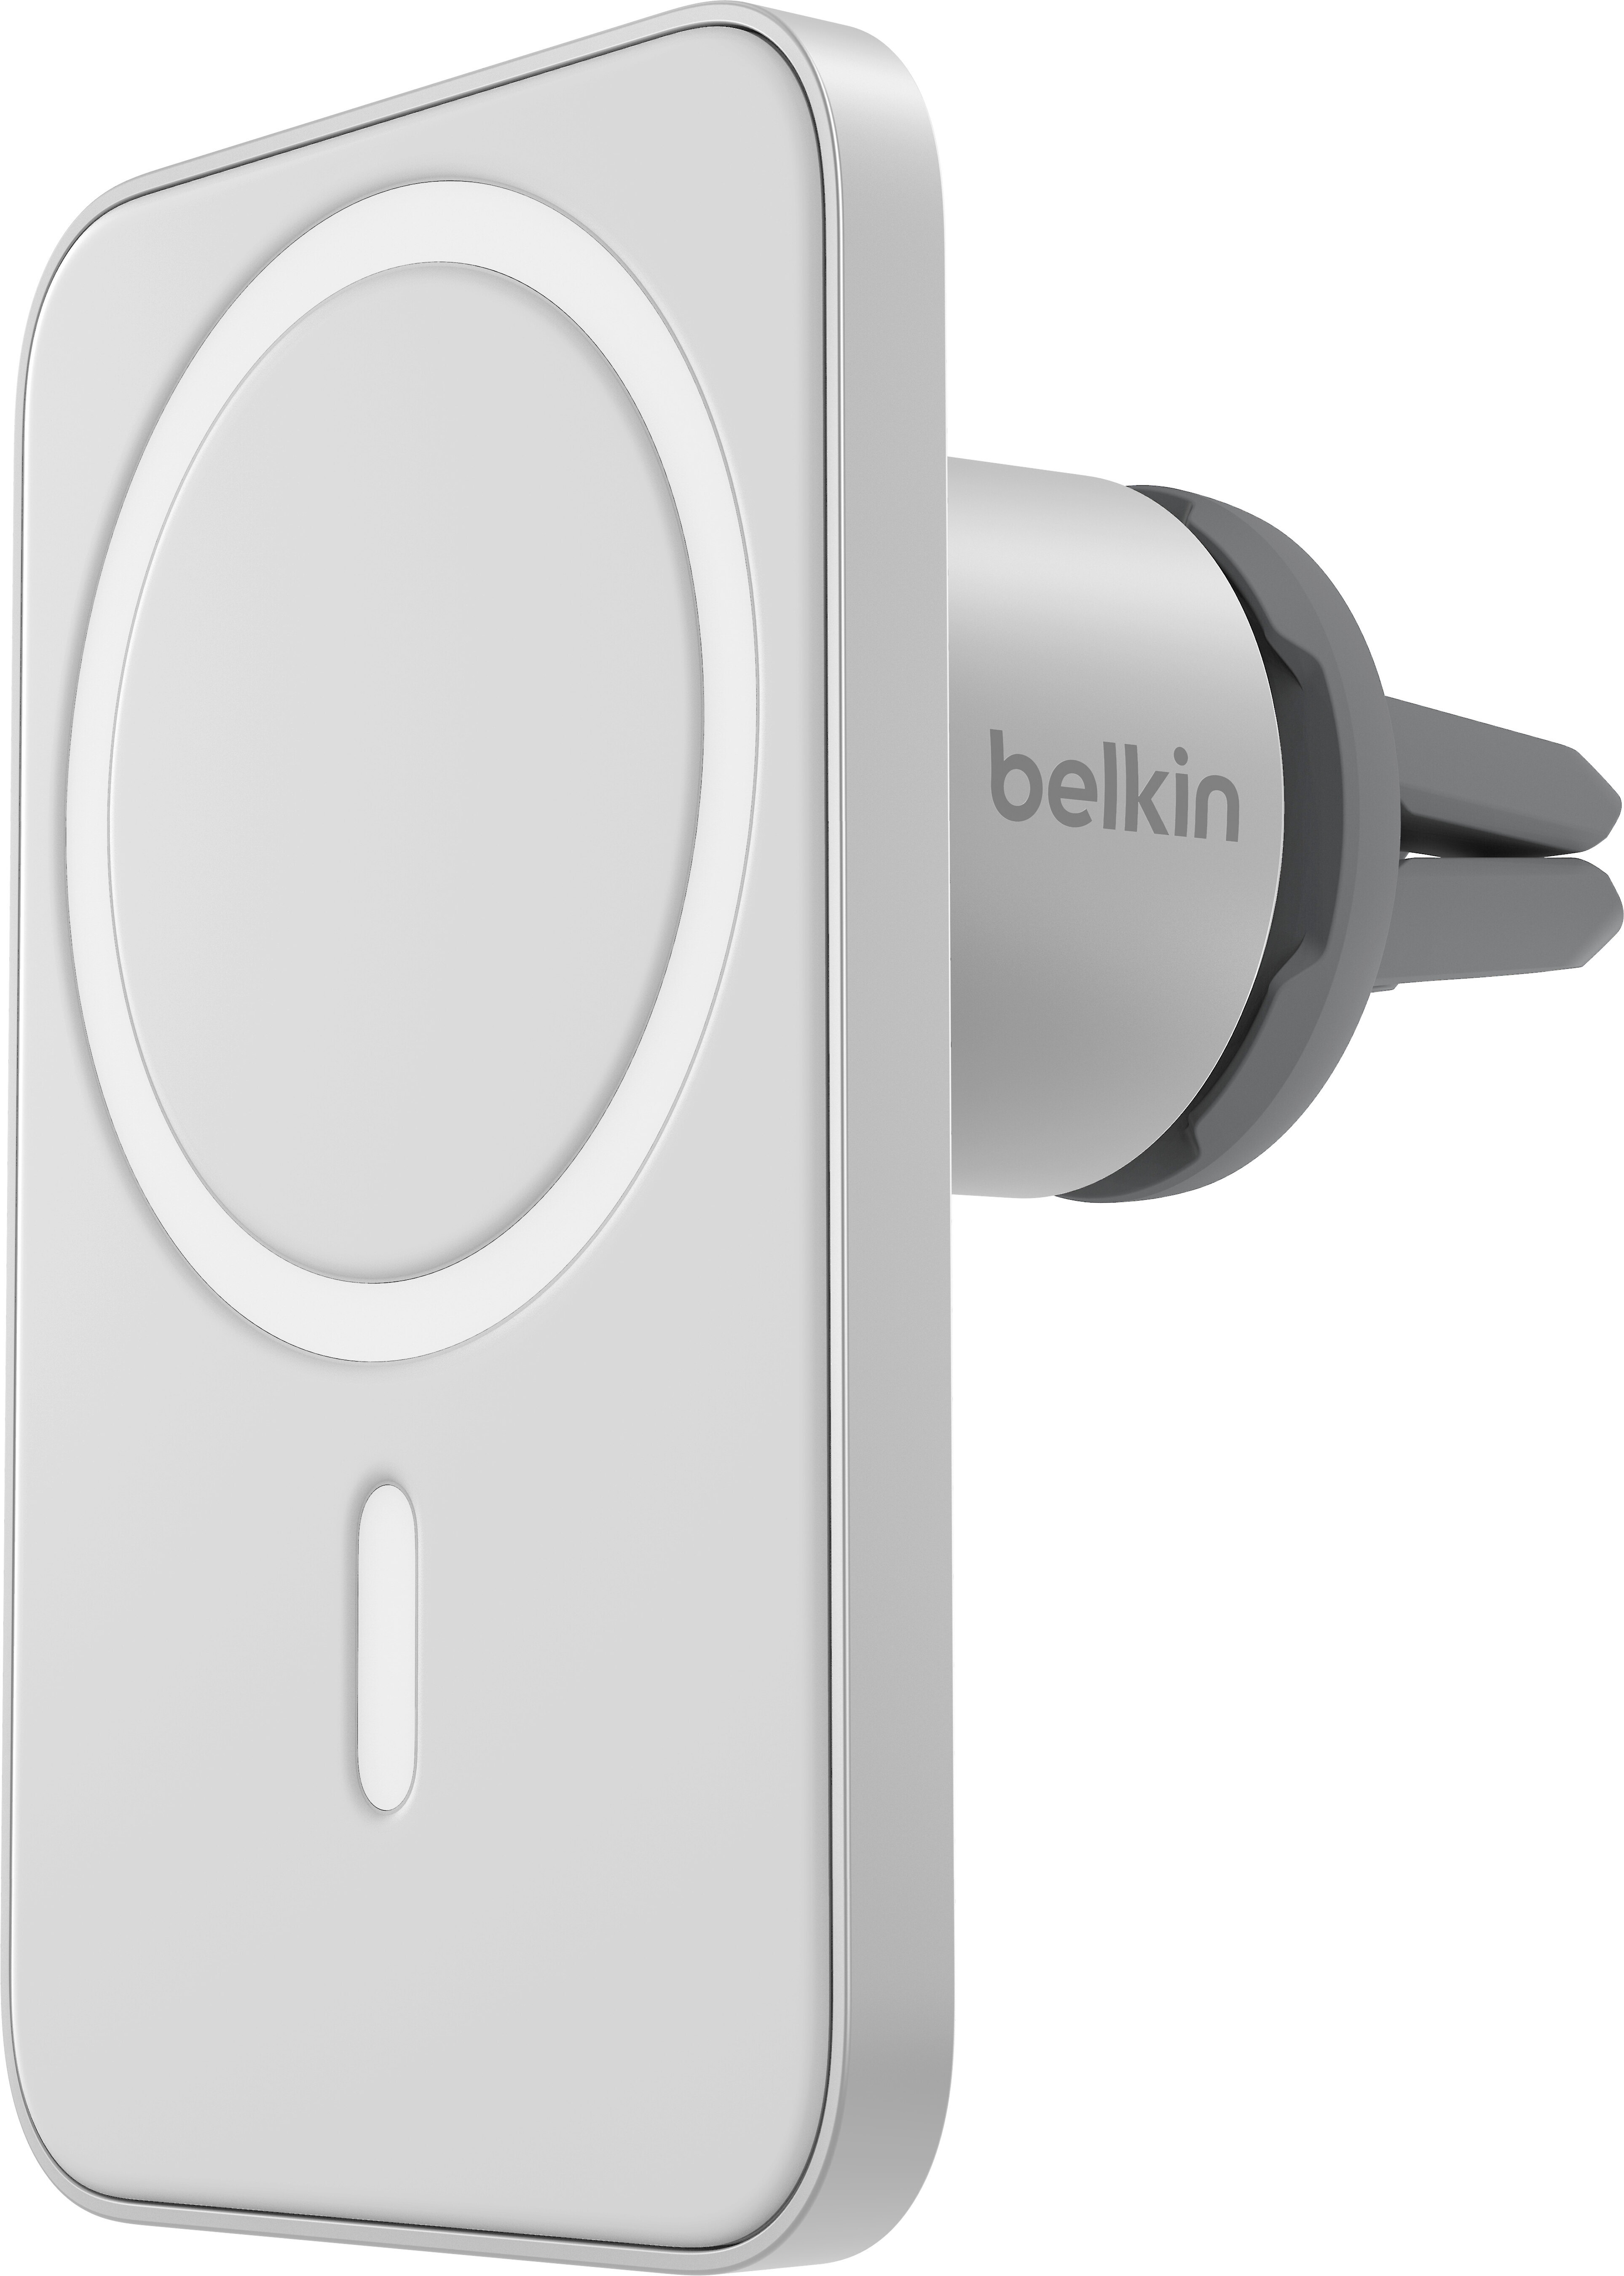 krullen Bijdrage Saga Belkin Universal Phone Mounts at Crutchfield